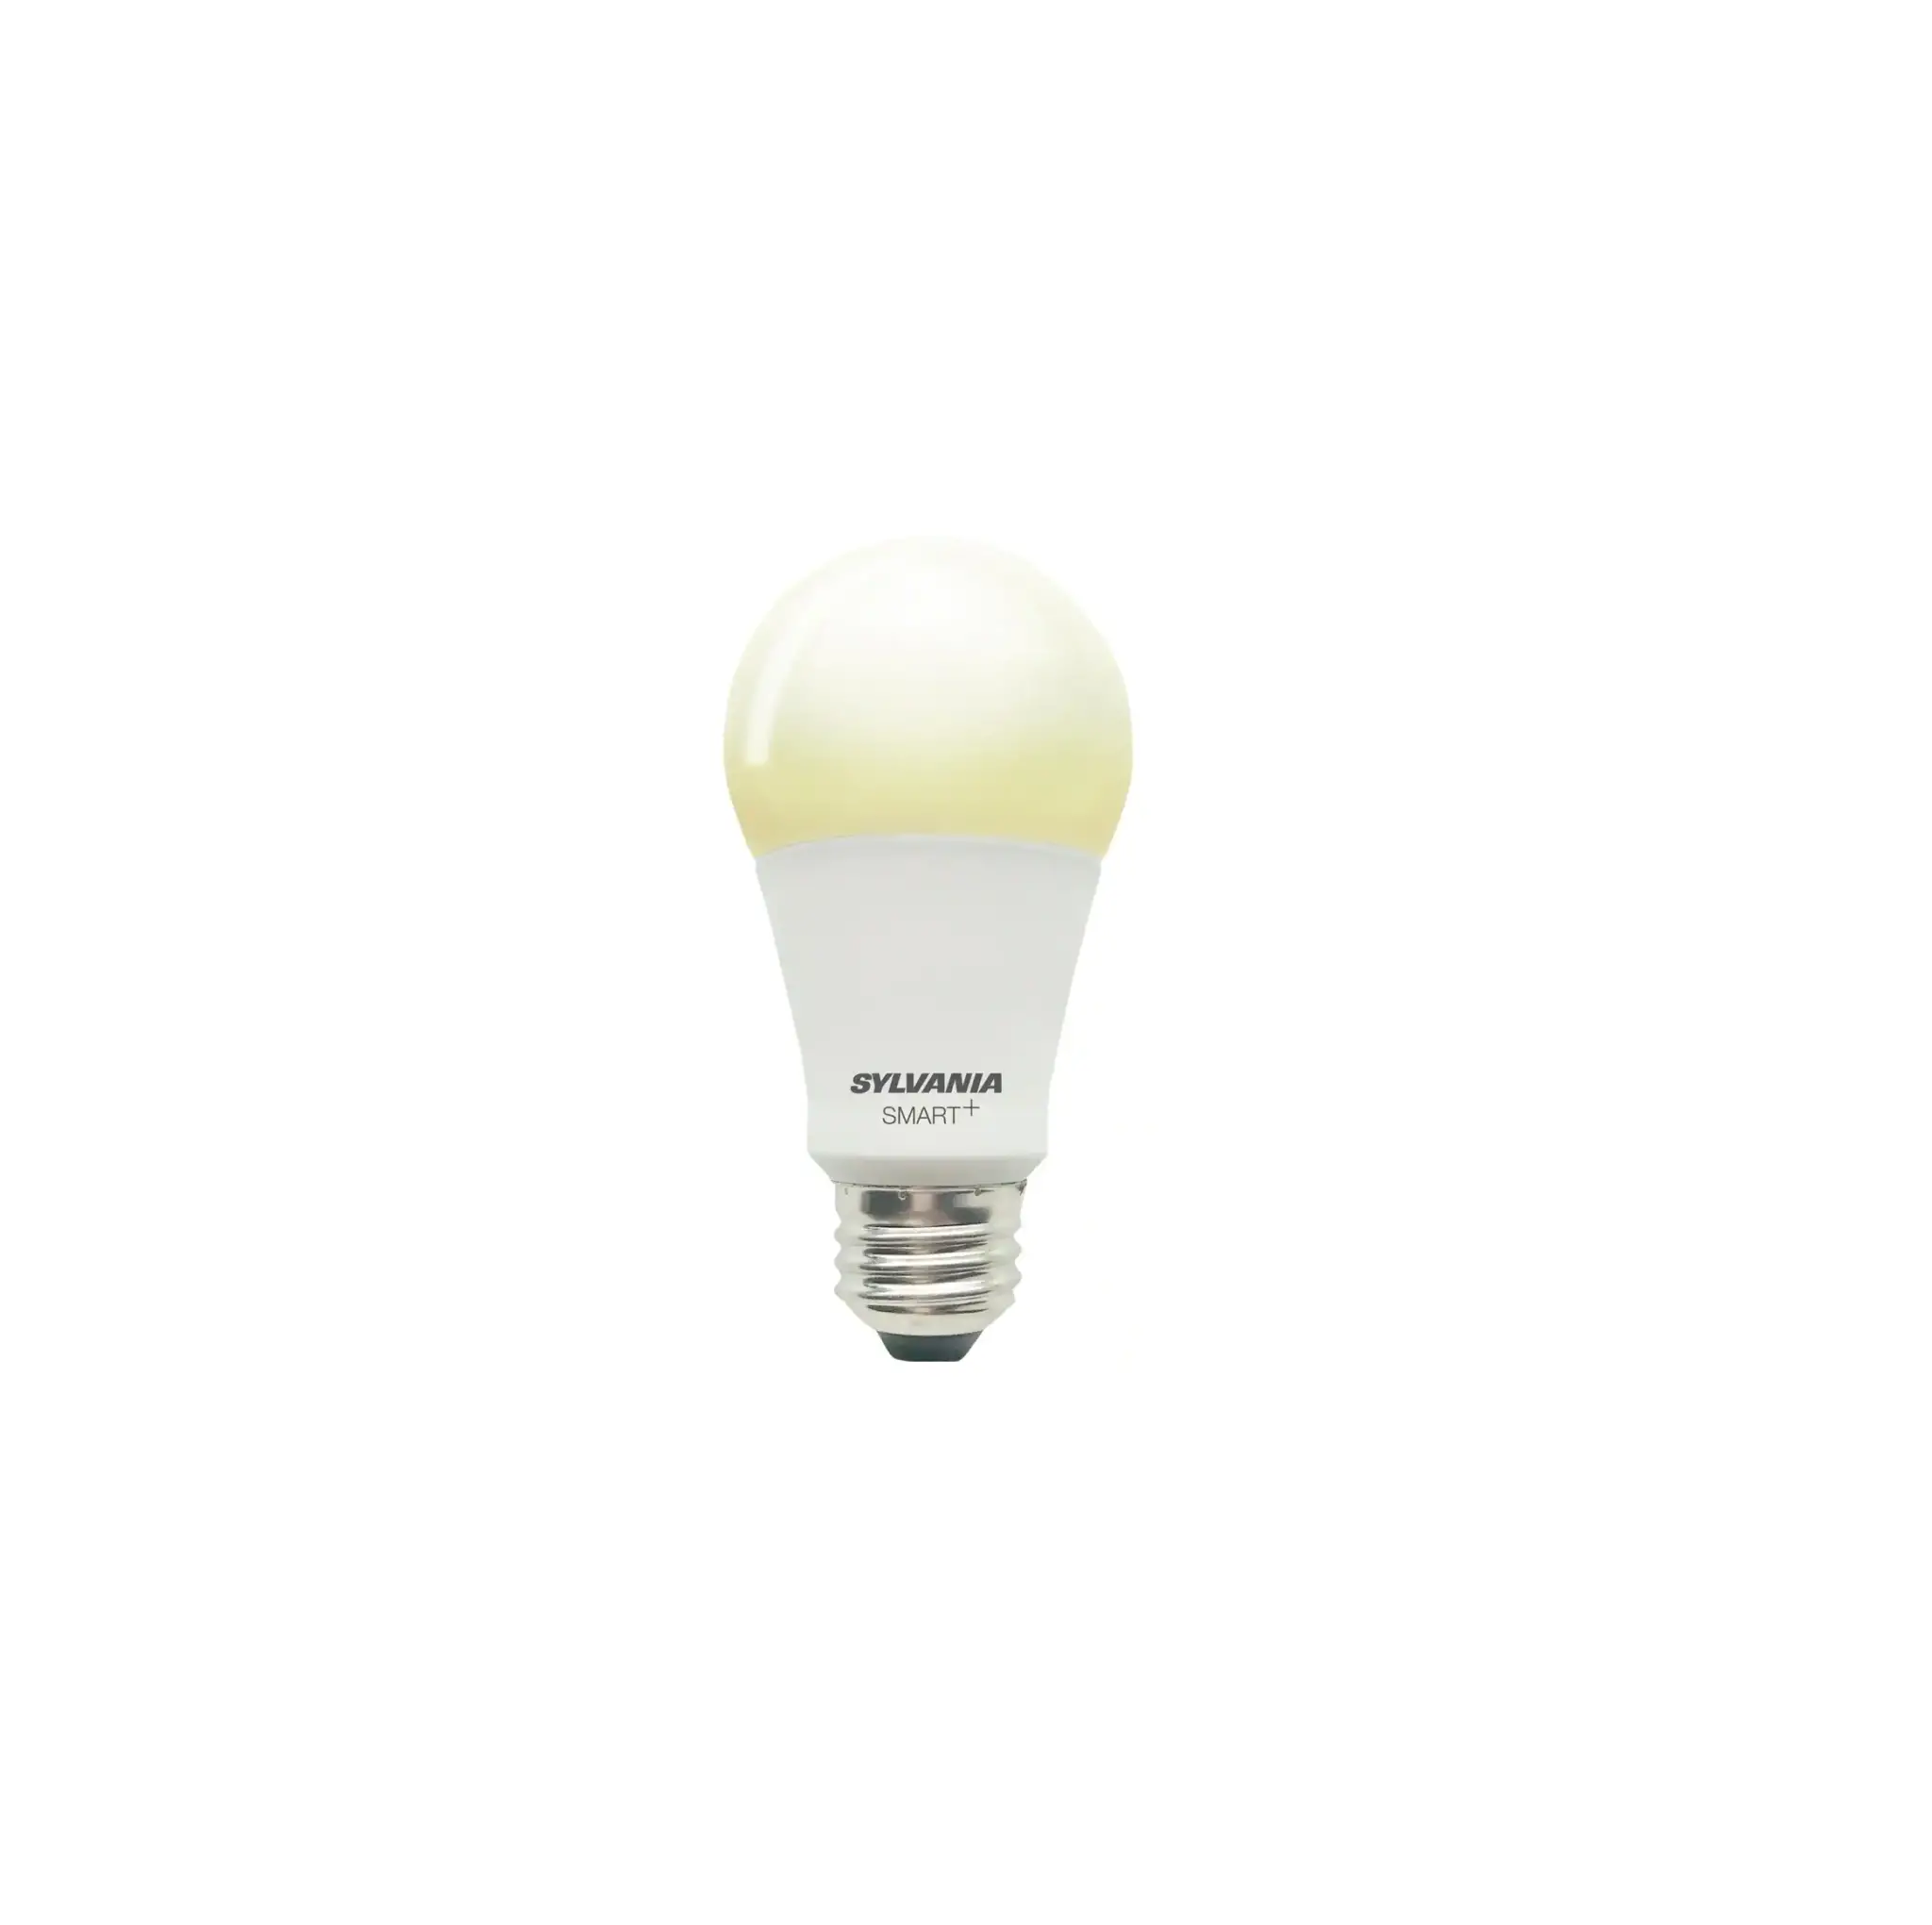 Smart+ Bluetooth Soft White A19 LED Bulb